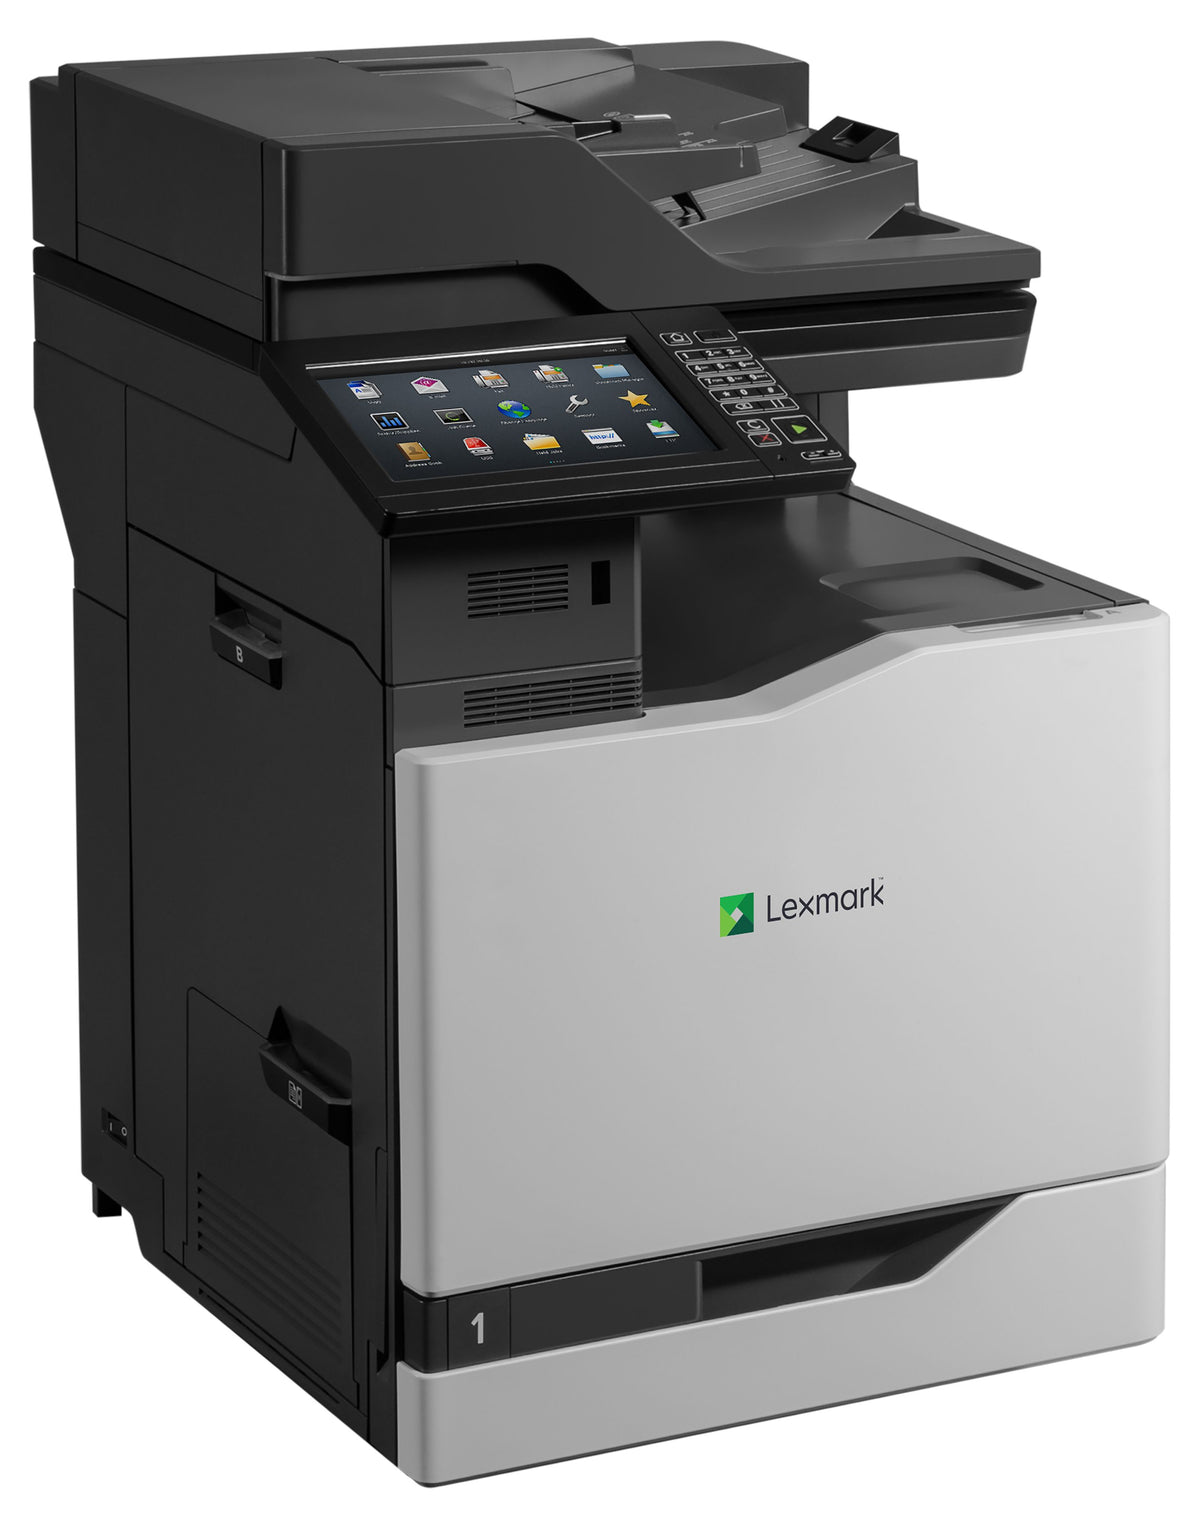 LEXMARK Multifunction Laser Printer CX860de